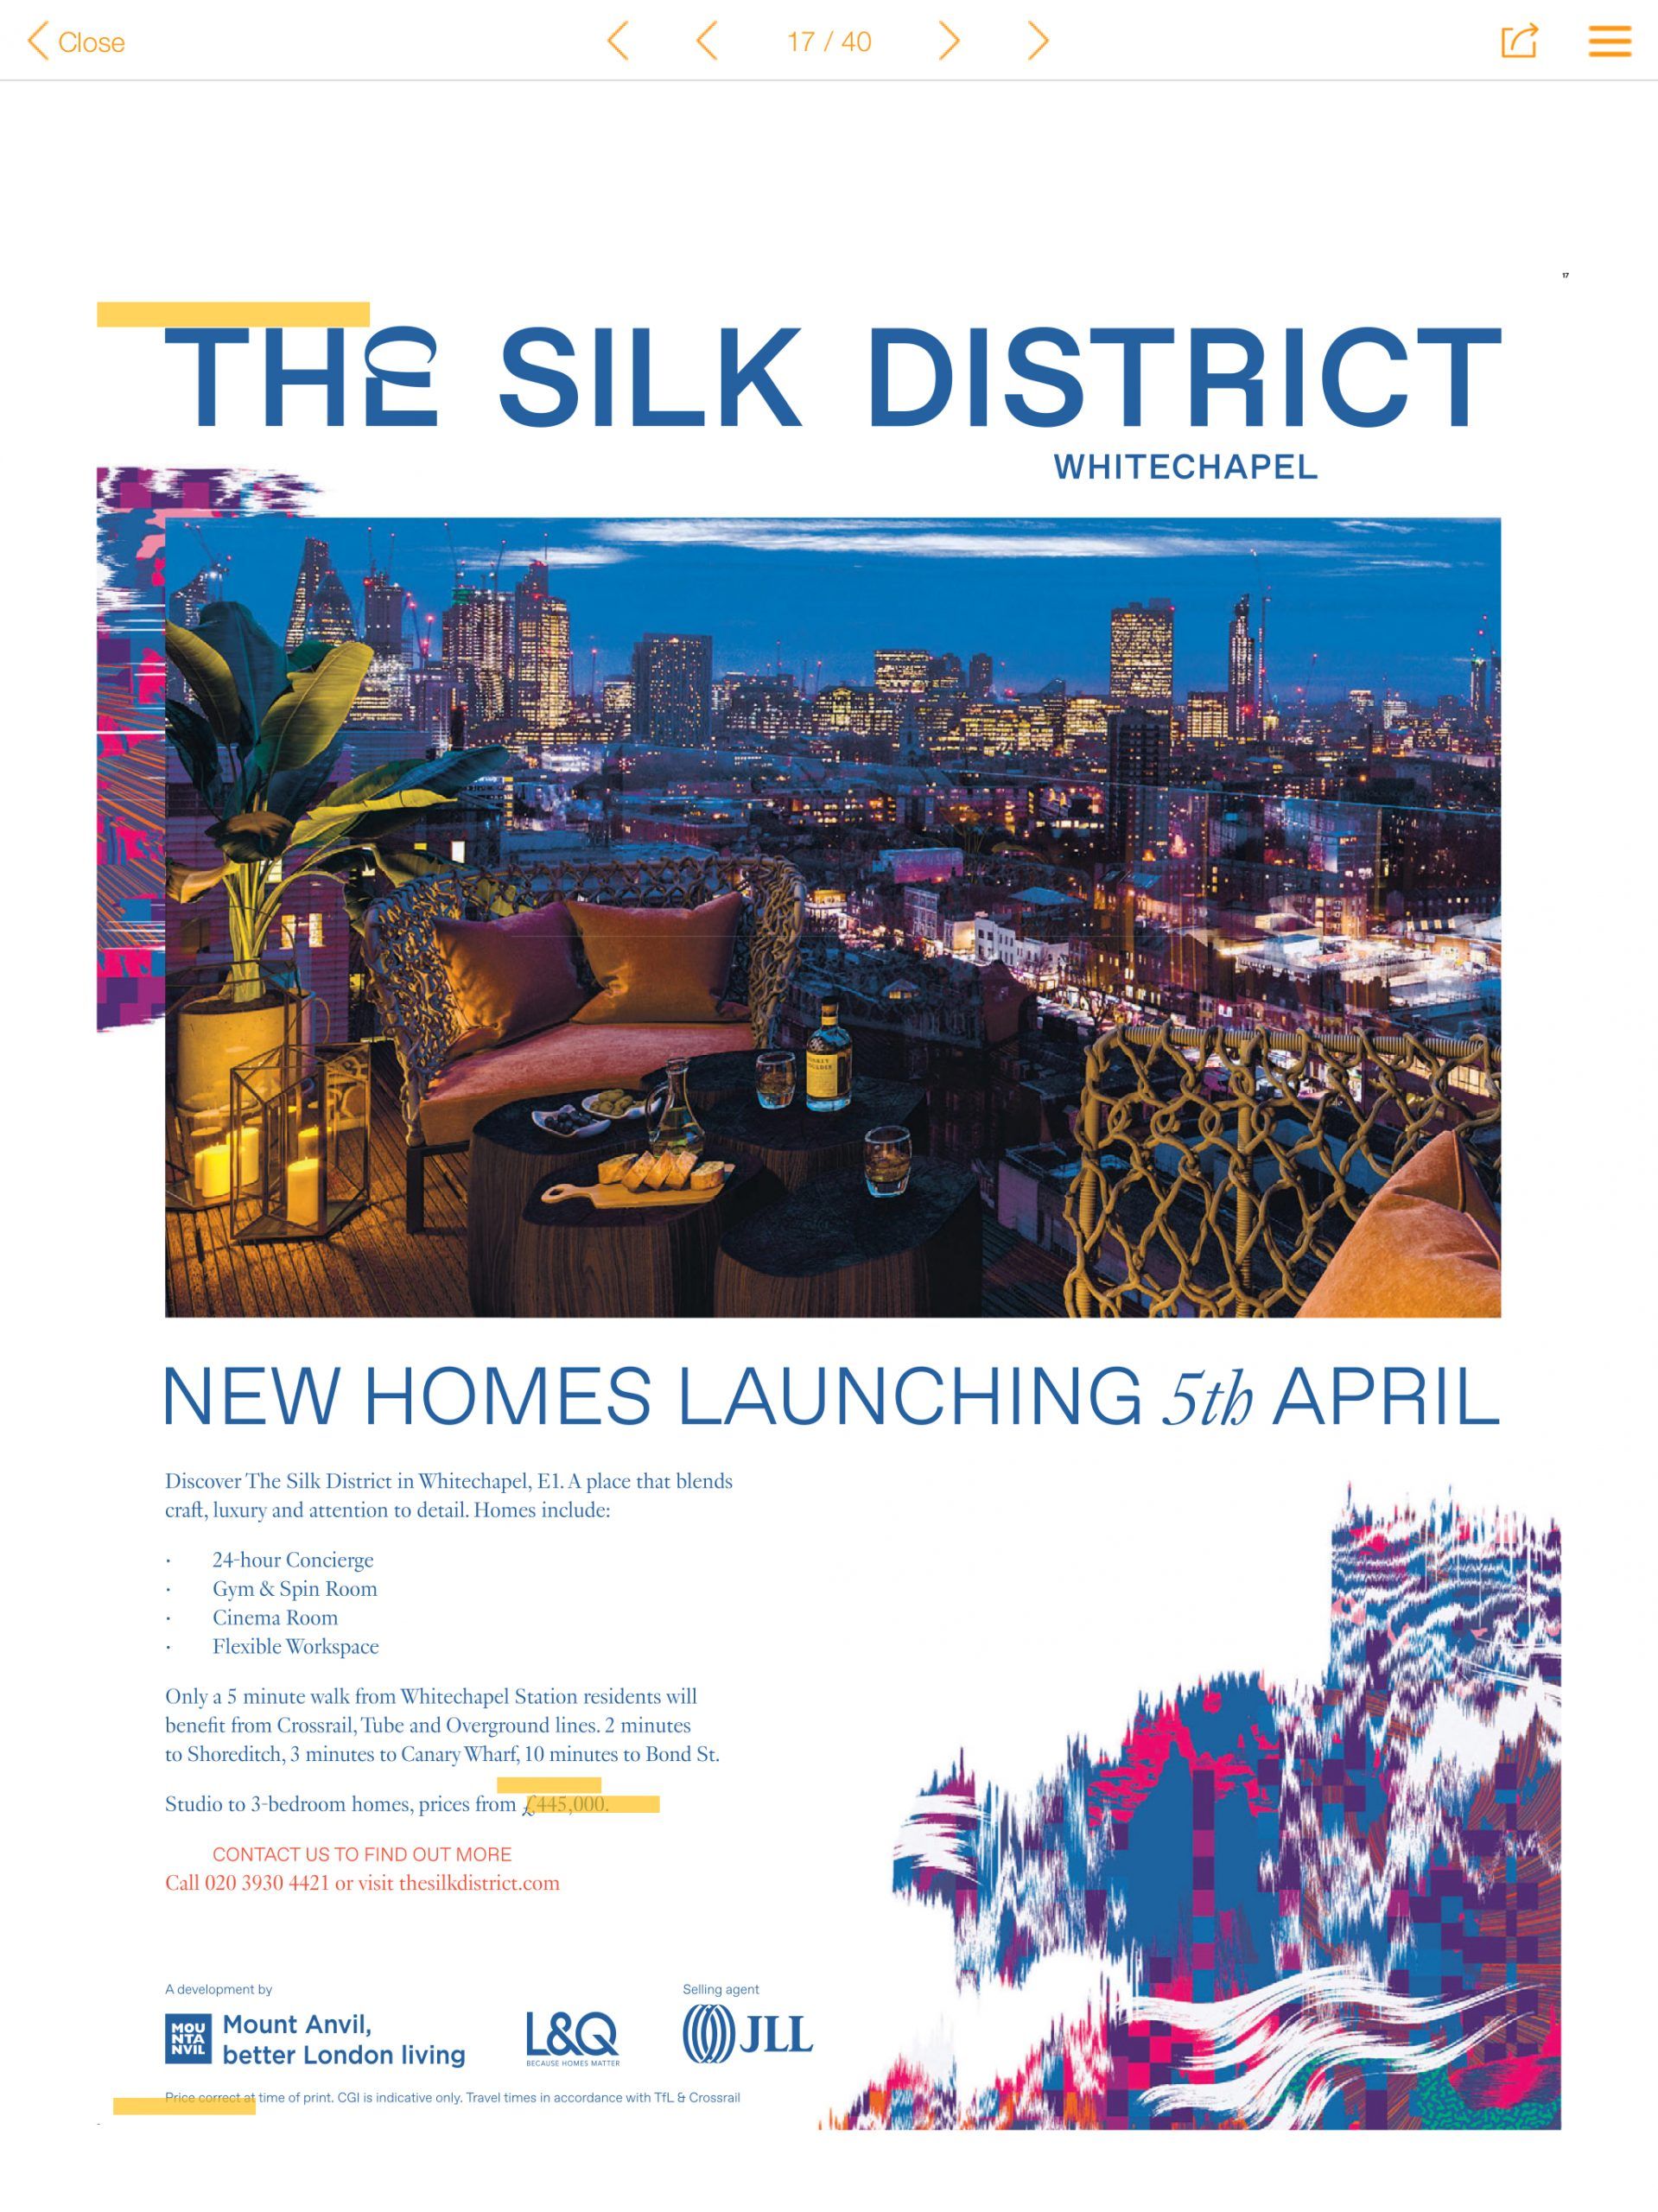 the silk district development ad